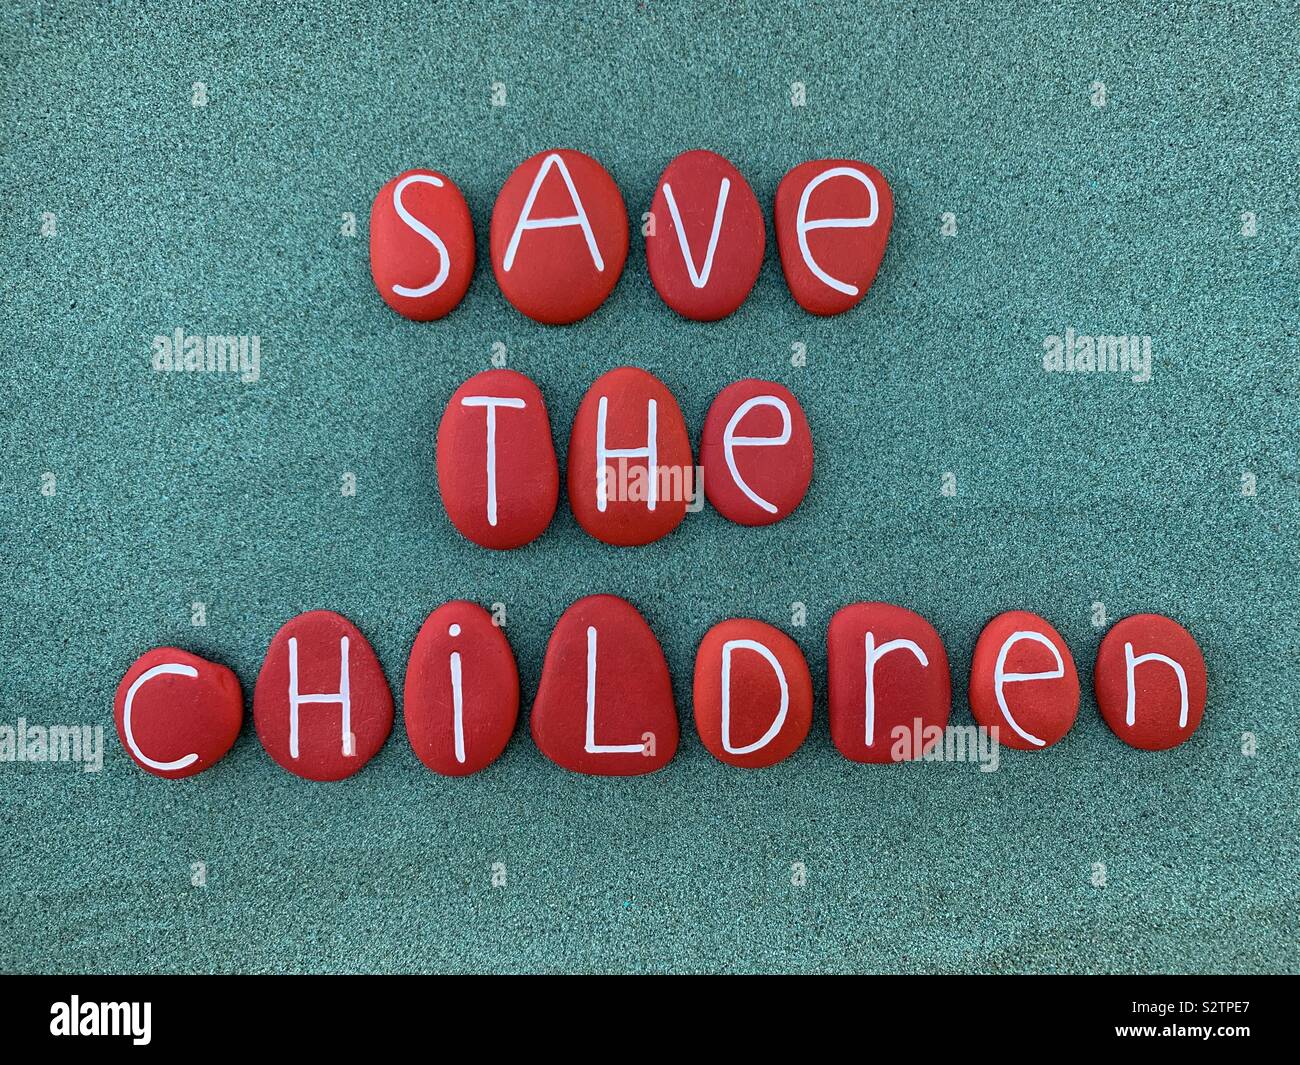 Save the children Stock Photo